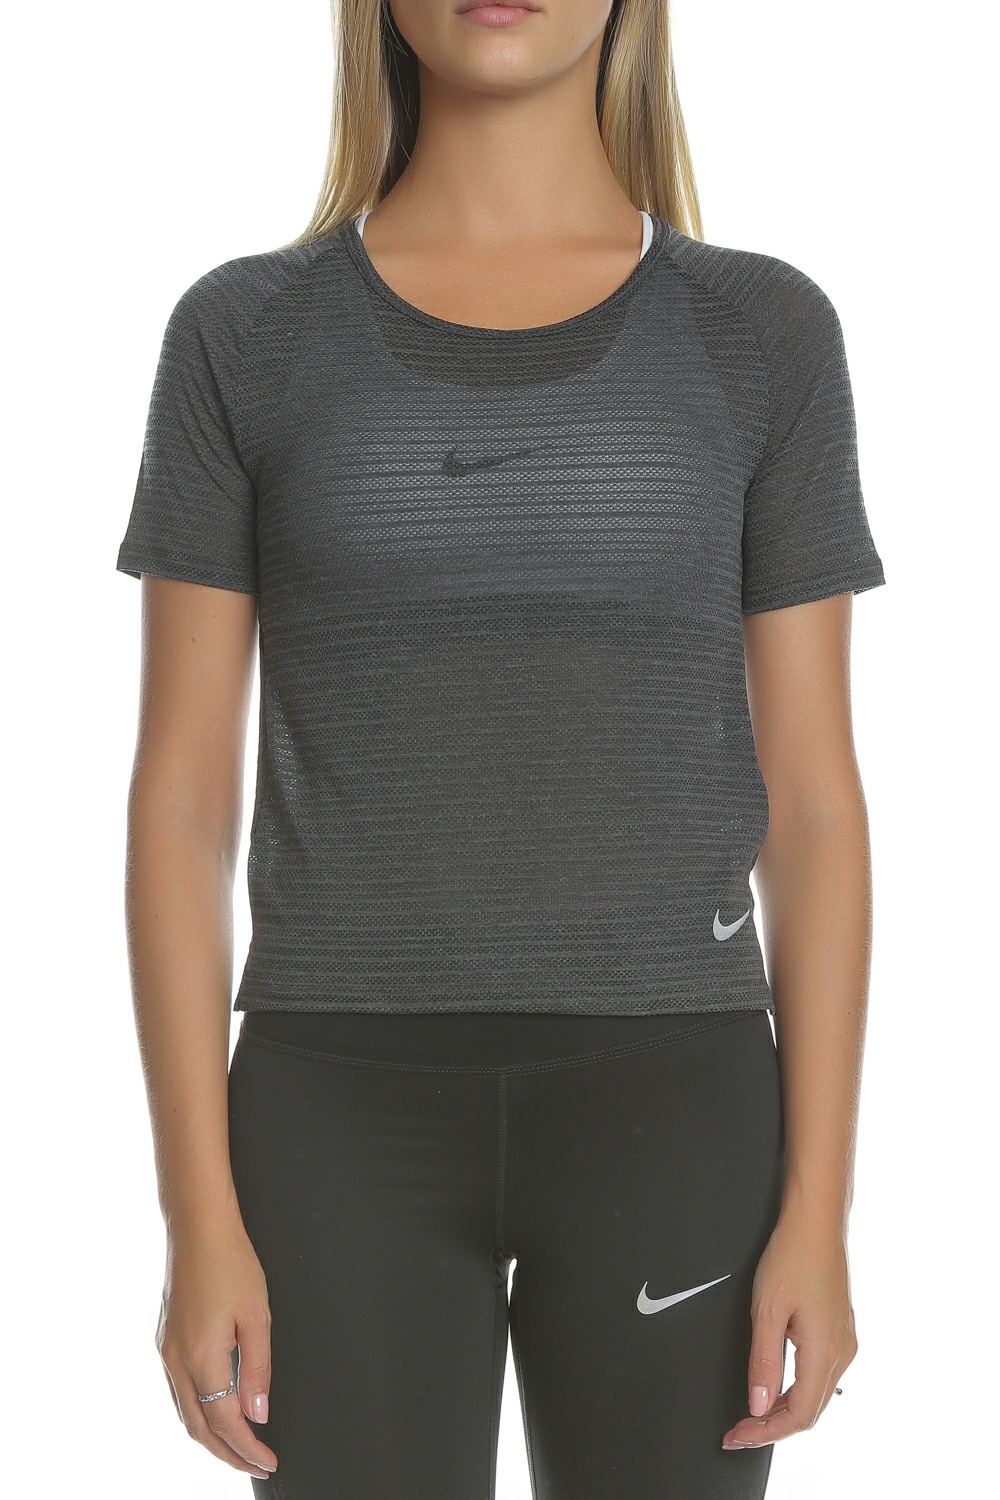 NIKE - Γυναικεία κοντομάνικη μπλούζα NIKE MILER TOP SS BREATHE ανθρακί Γυναικεία/Ρούχα/Αθλητικά/T-shirt-Τοπ